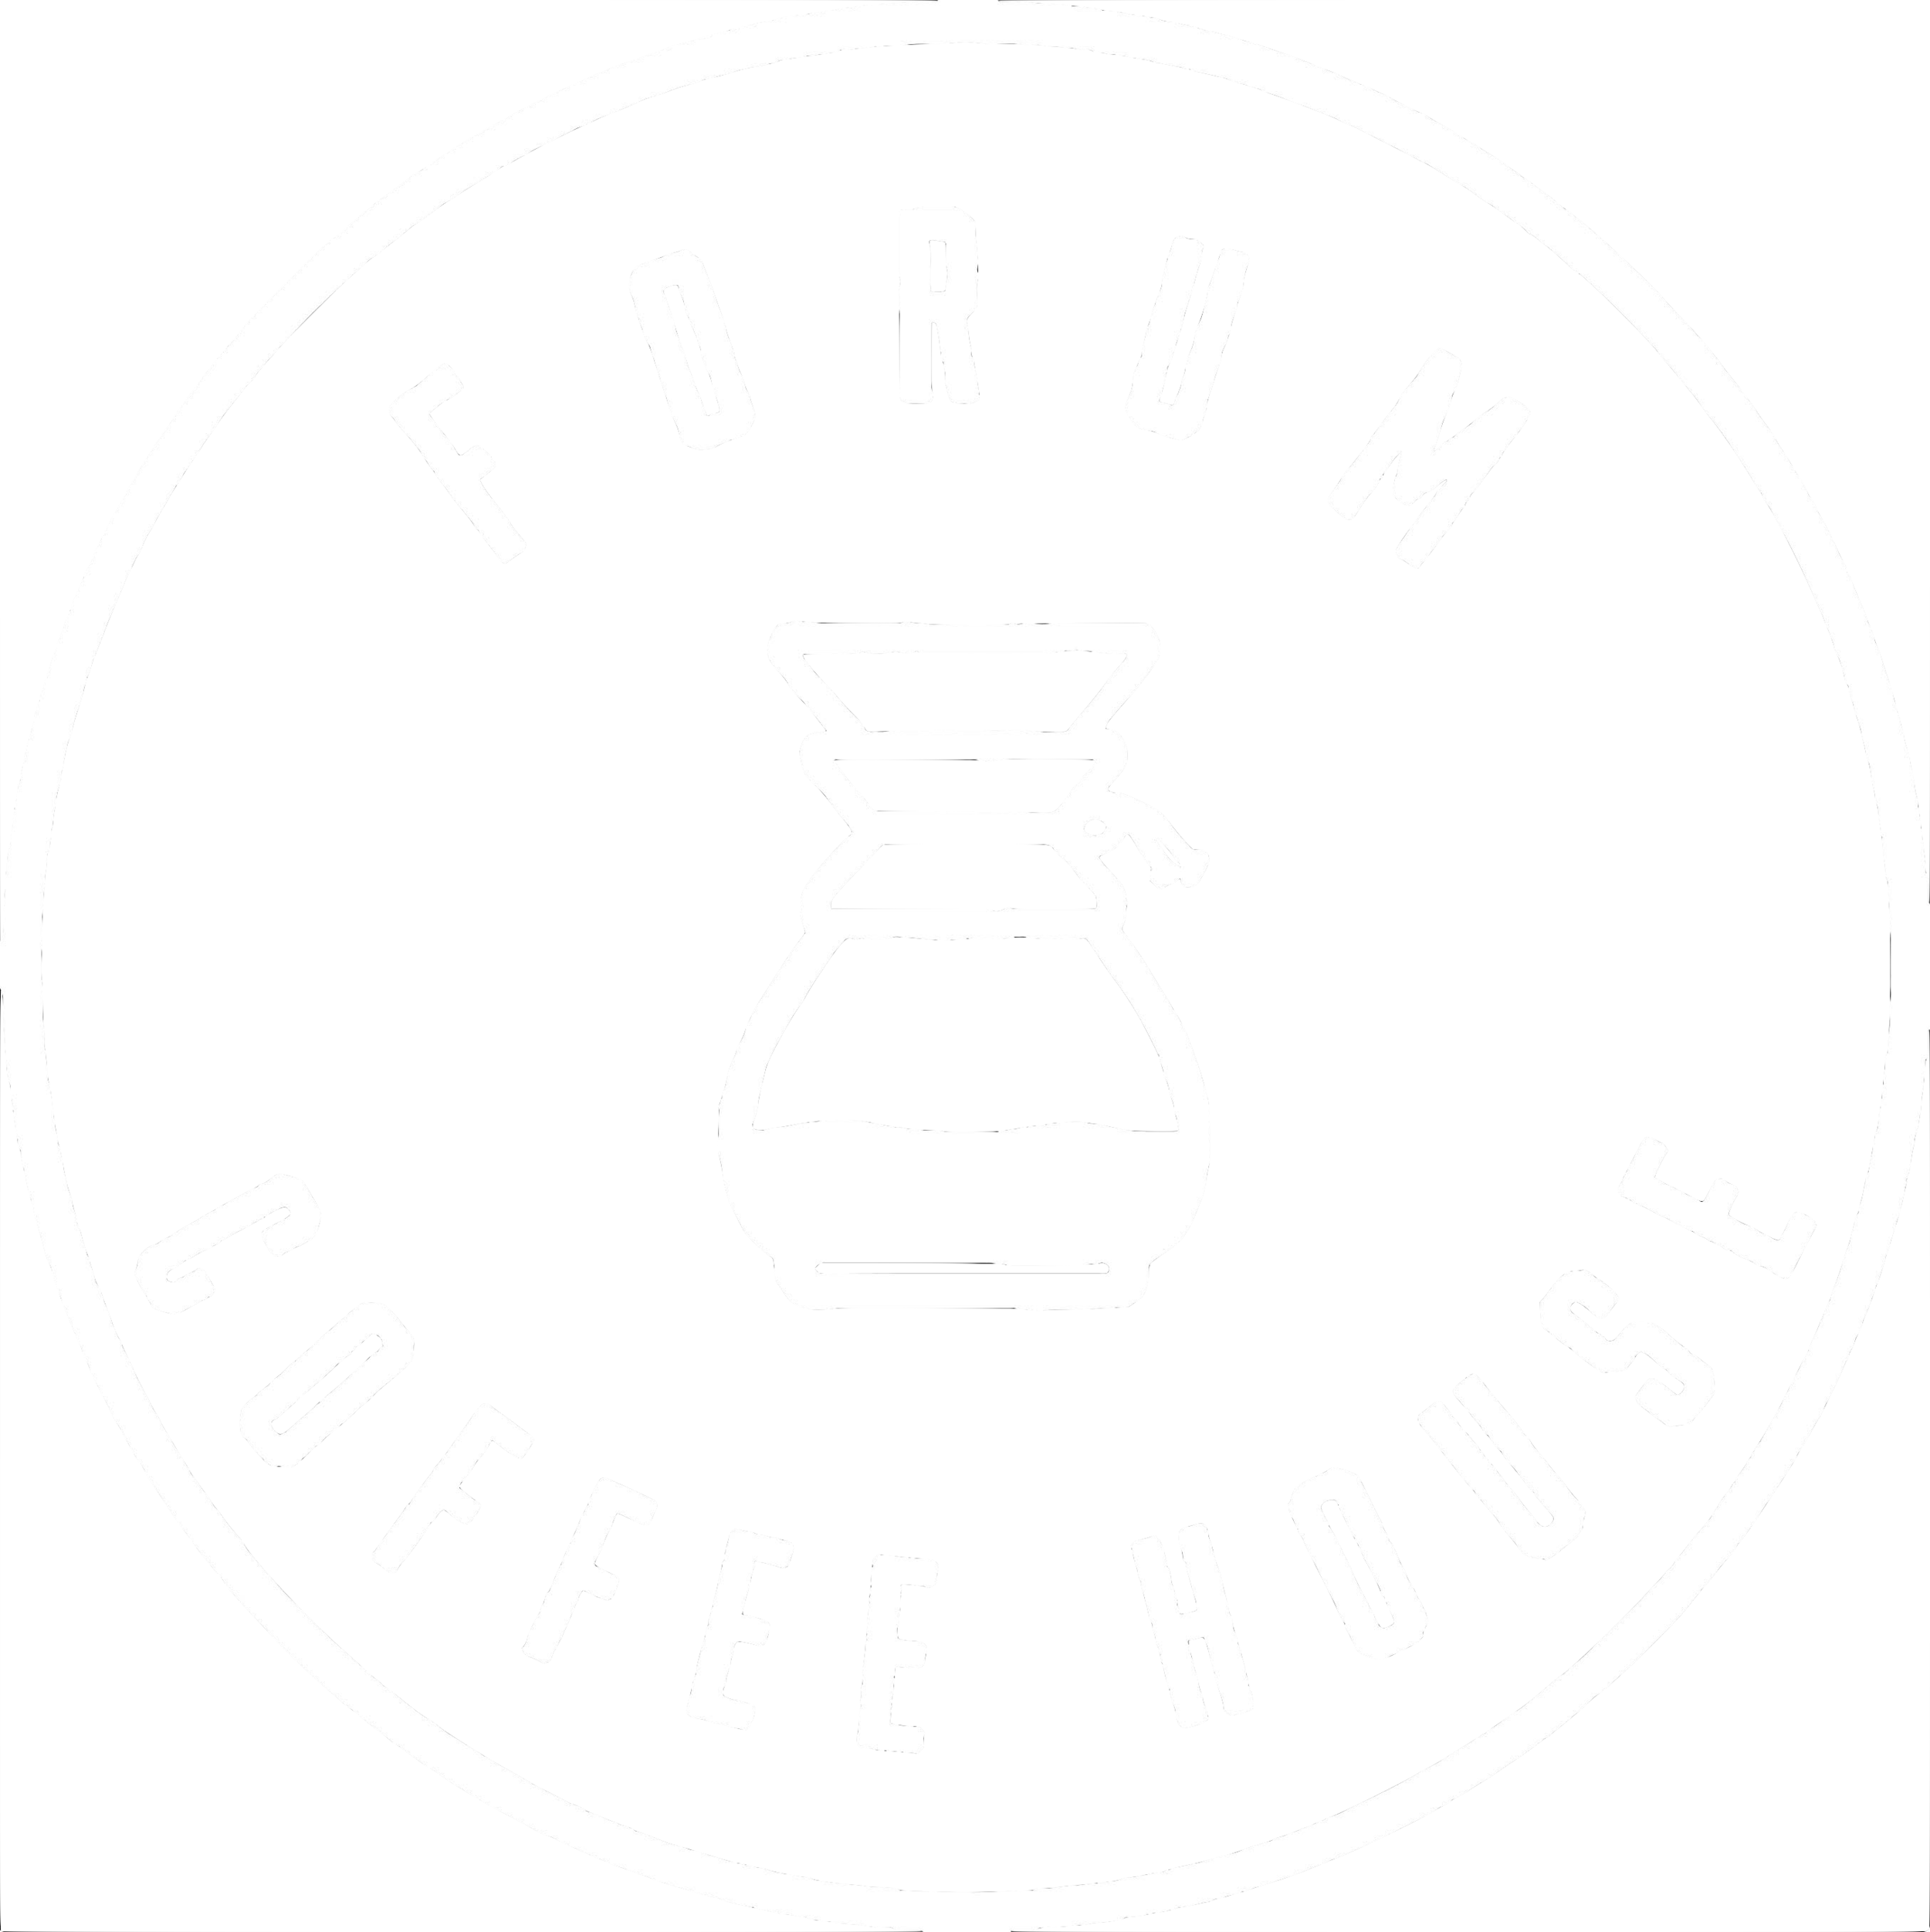 Forum Coffee House